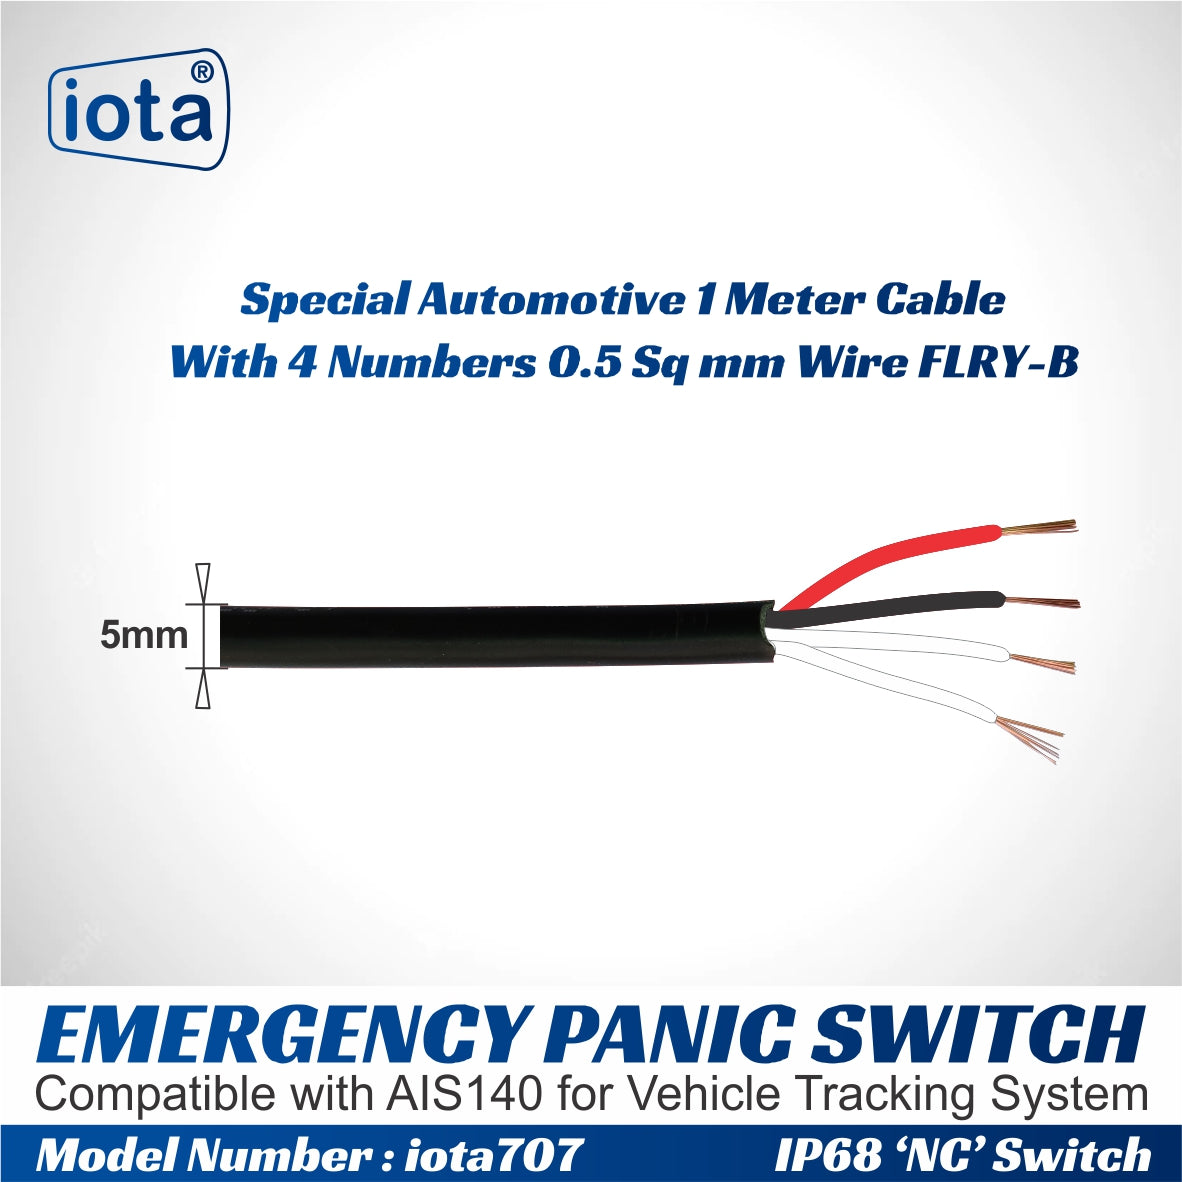 iota Emergency Panic Switch iota707 Compatible with AIS 140 IOTA